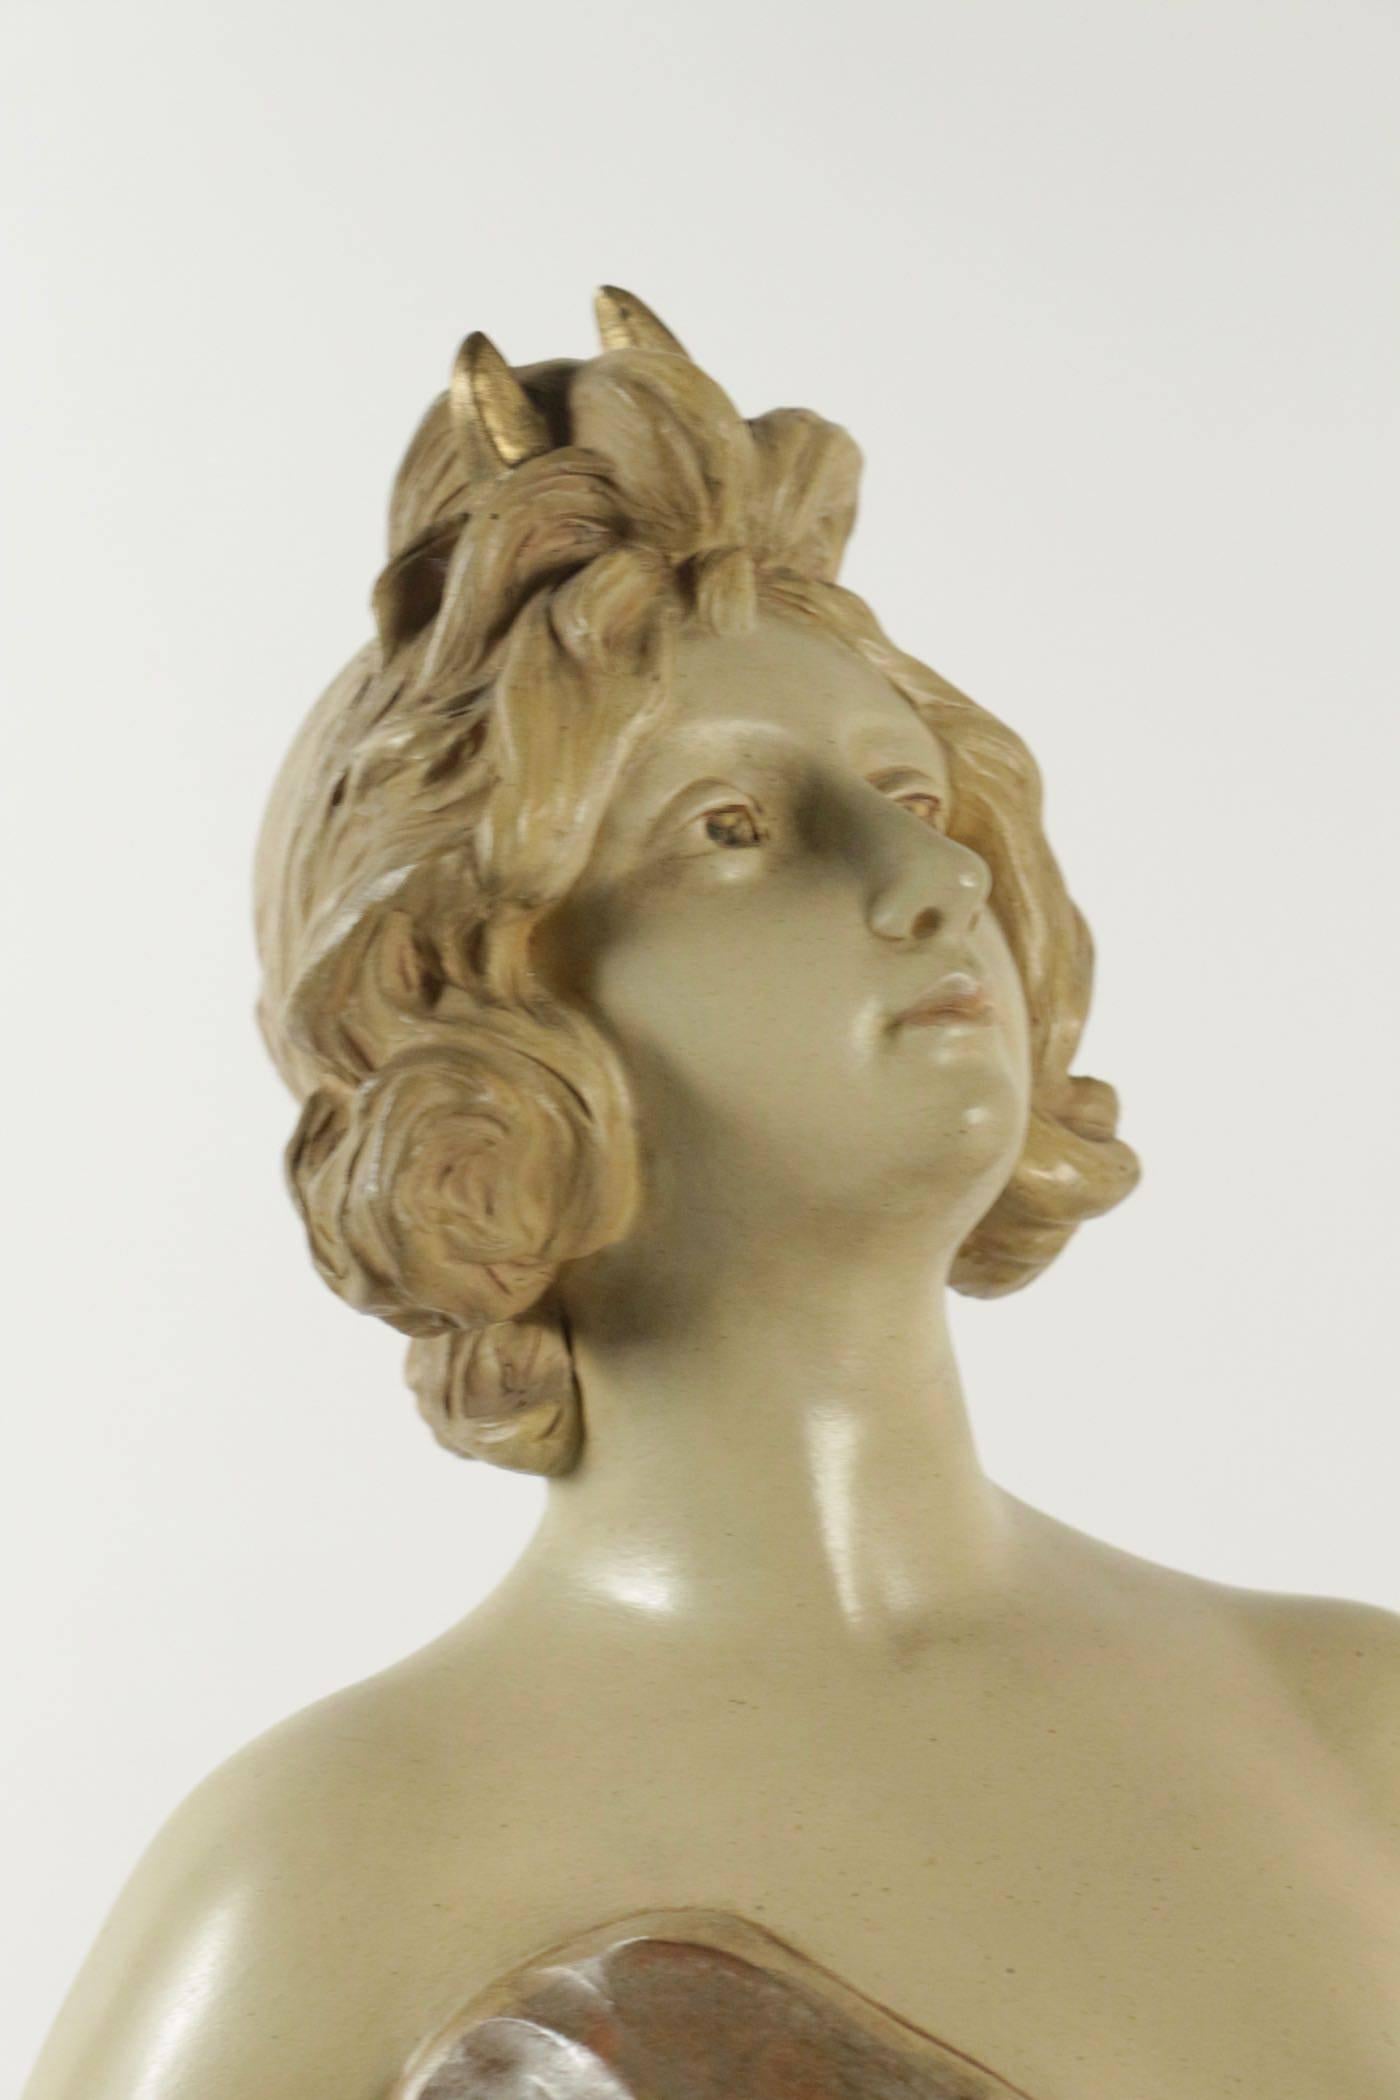 Sculpture, terracotta, 1900, statue representing Diane Chasseresse, signed Paladin. 
Measures: H: 84 cm, W: 41 cm, W: 25 cm.